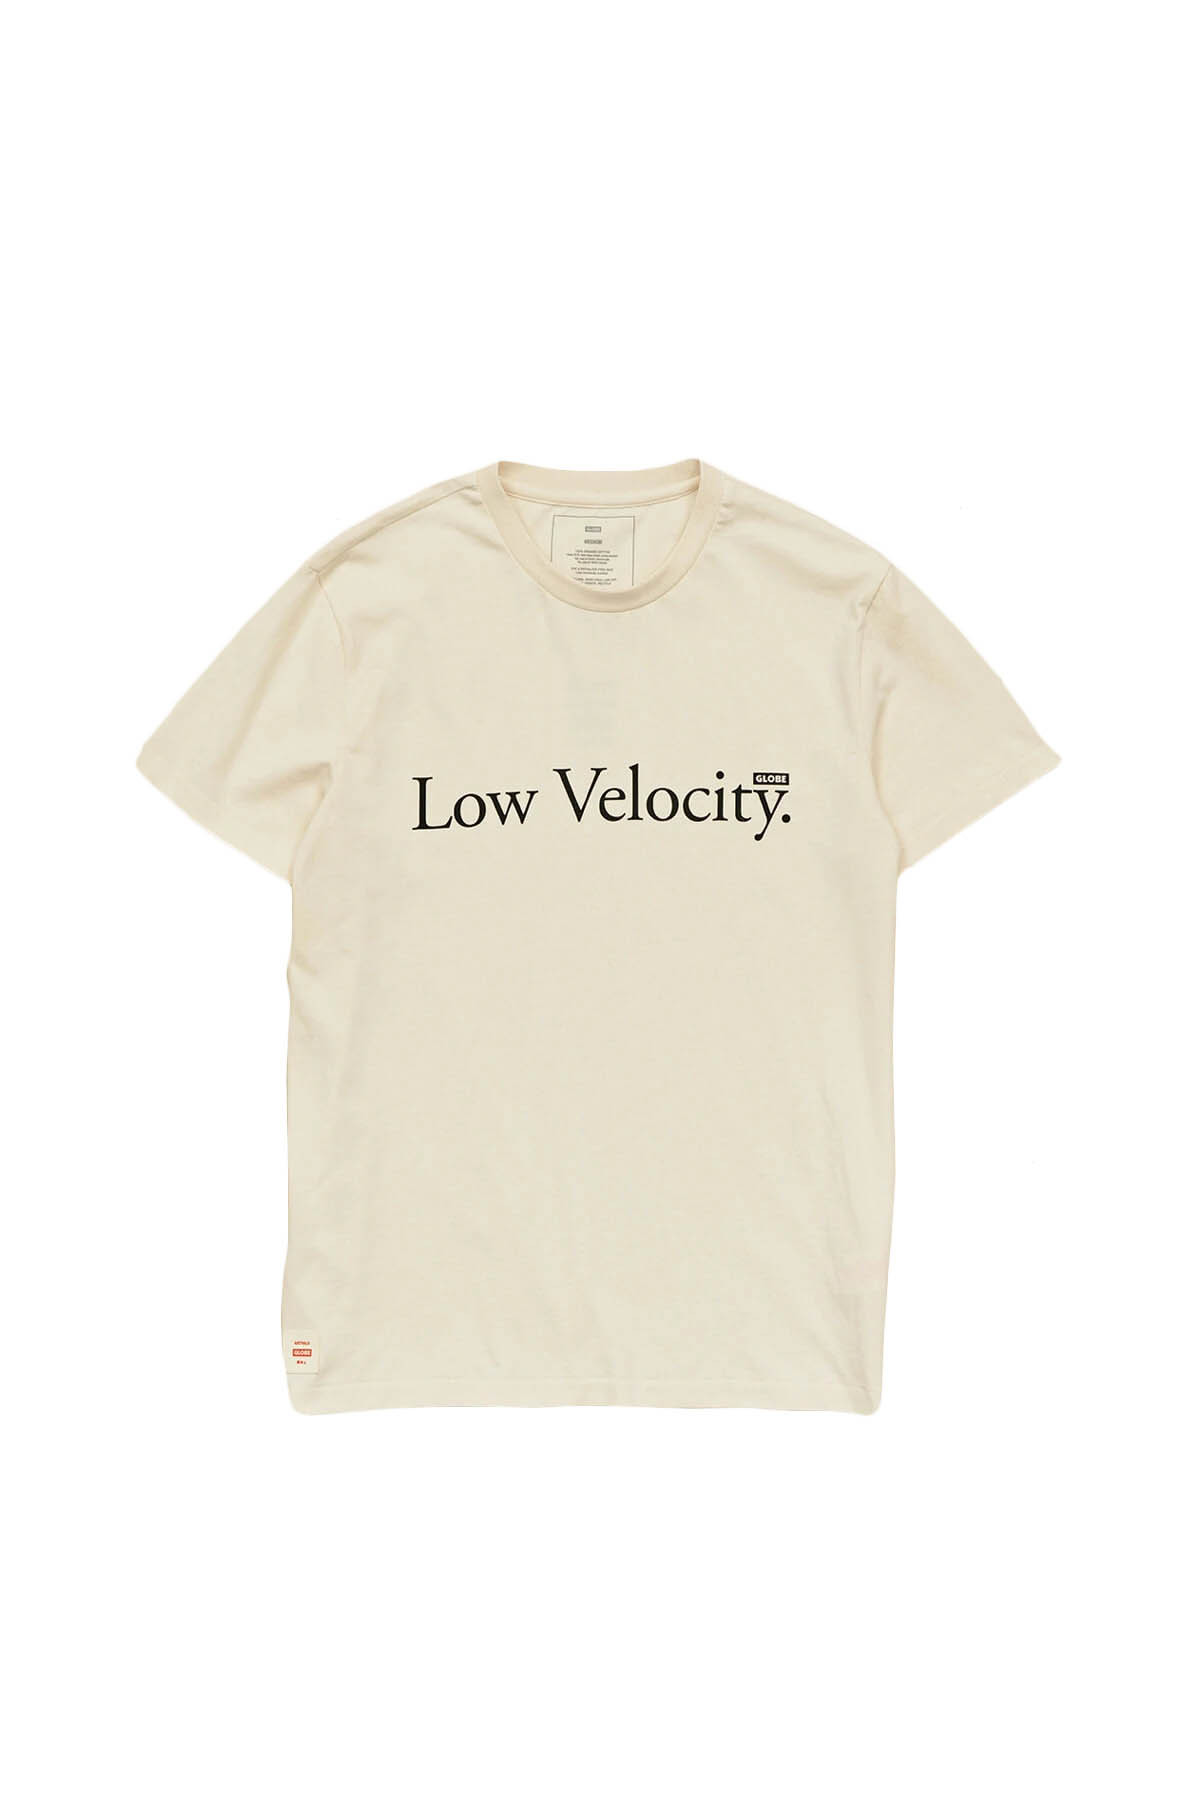 T-shirt Globe Lv - Globe - T-Shirts Mode - T-Shirts